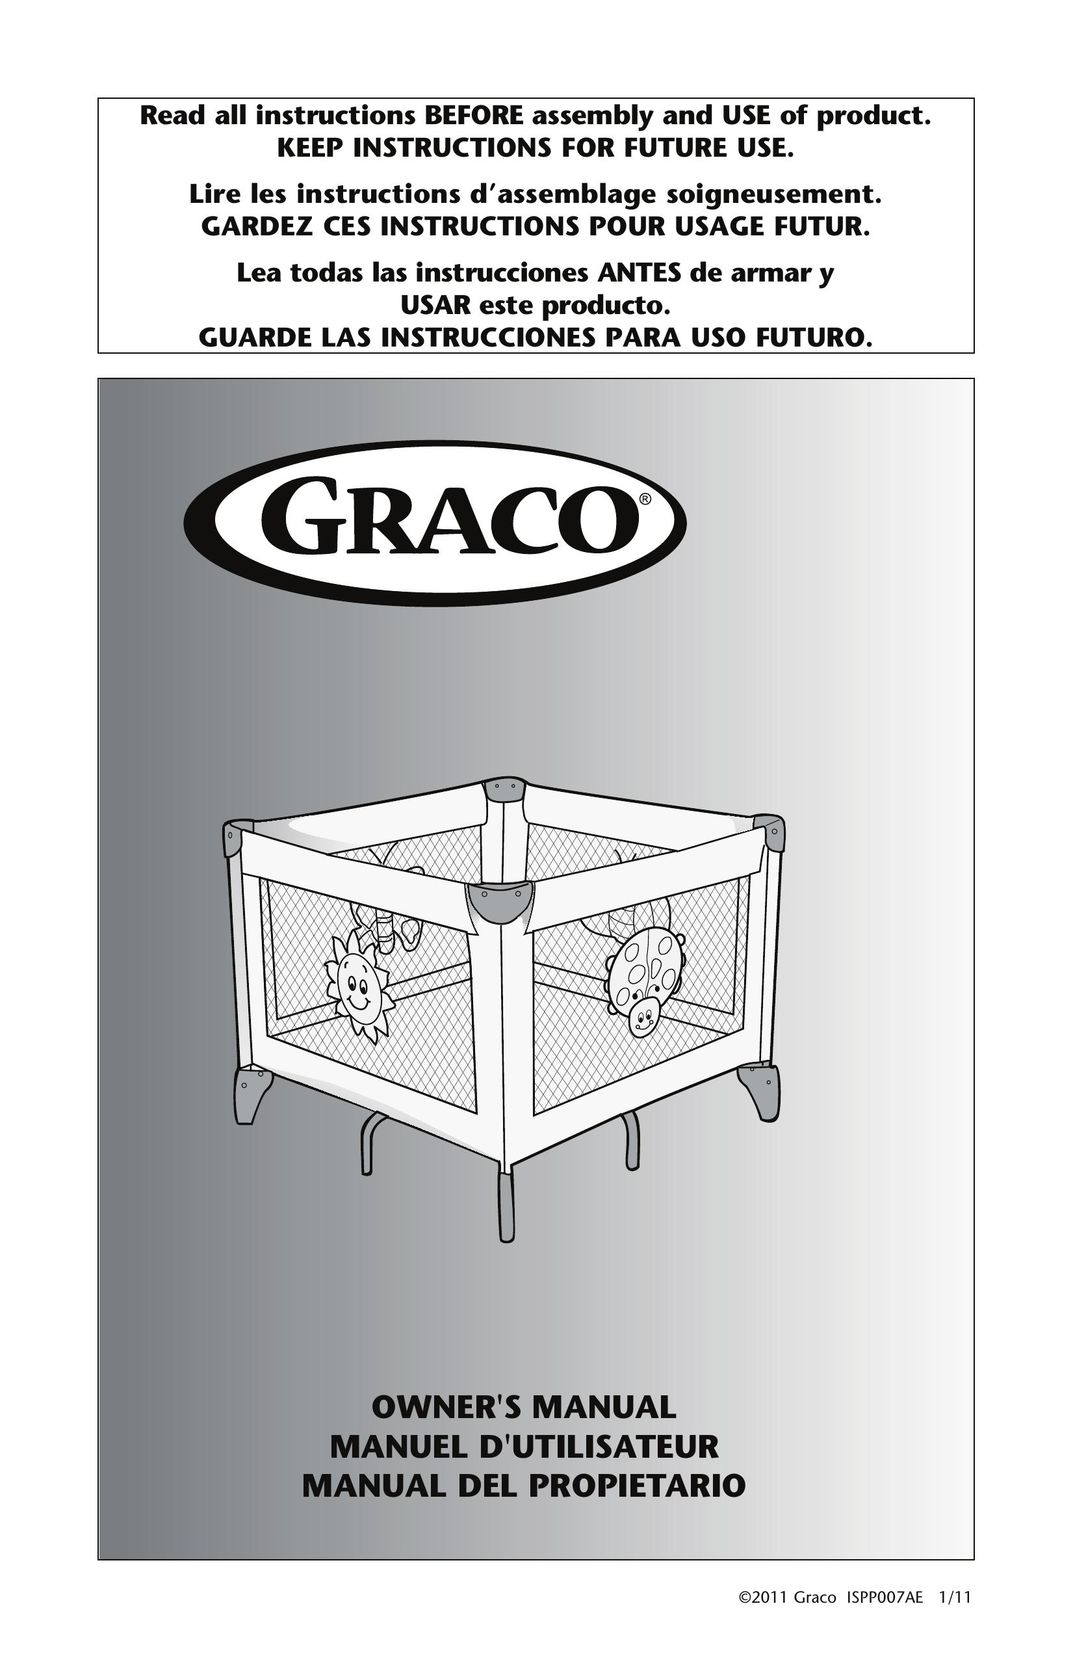 Graco ISPP007AE Baby Playpen User Manual